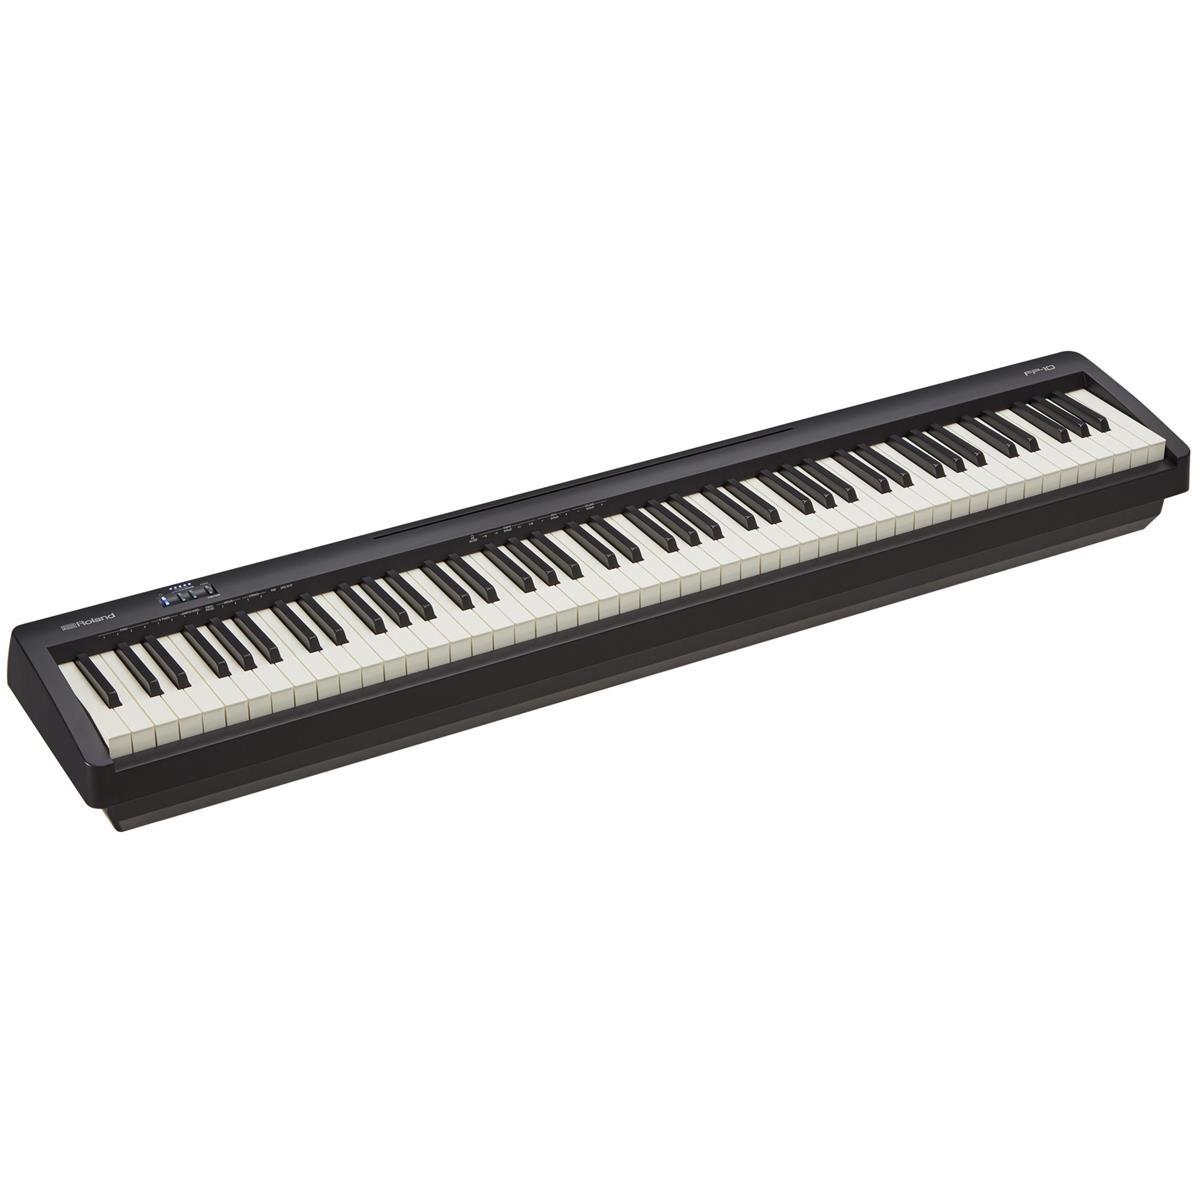 Roland FP-10 88-Key Digital Piano $419 + Free Shipping